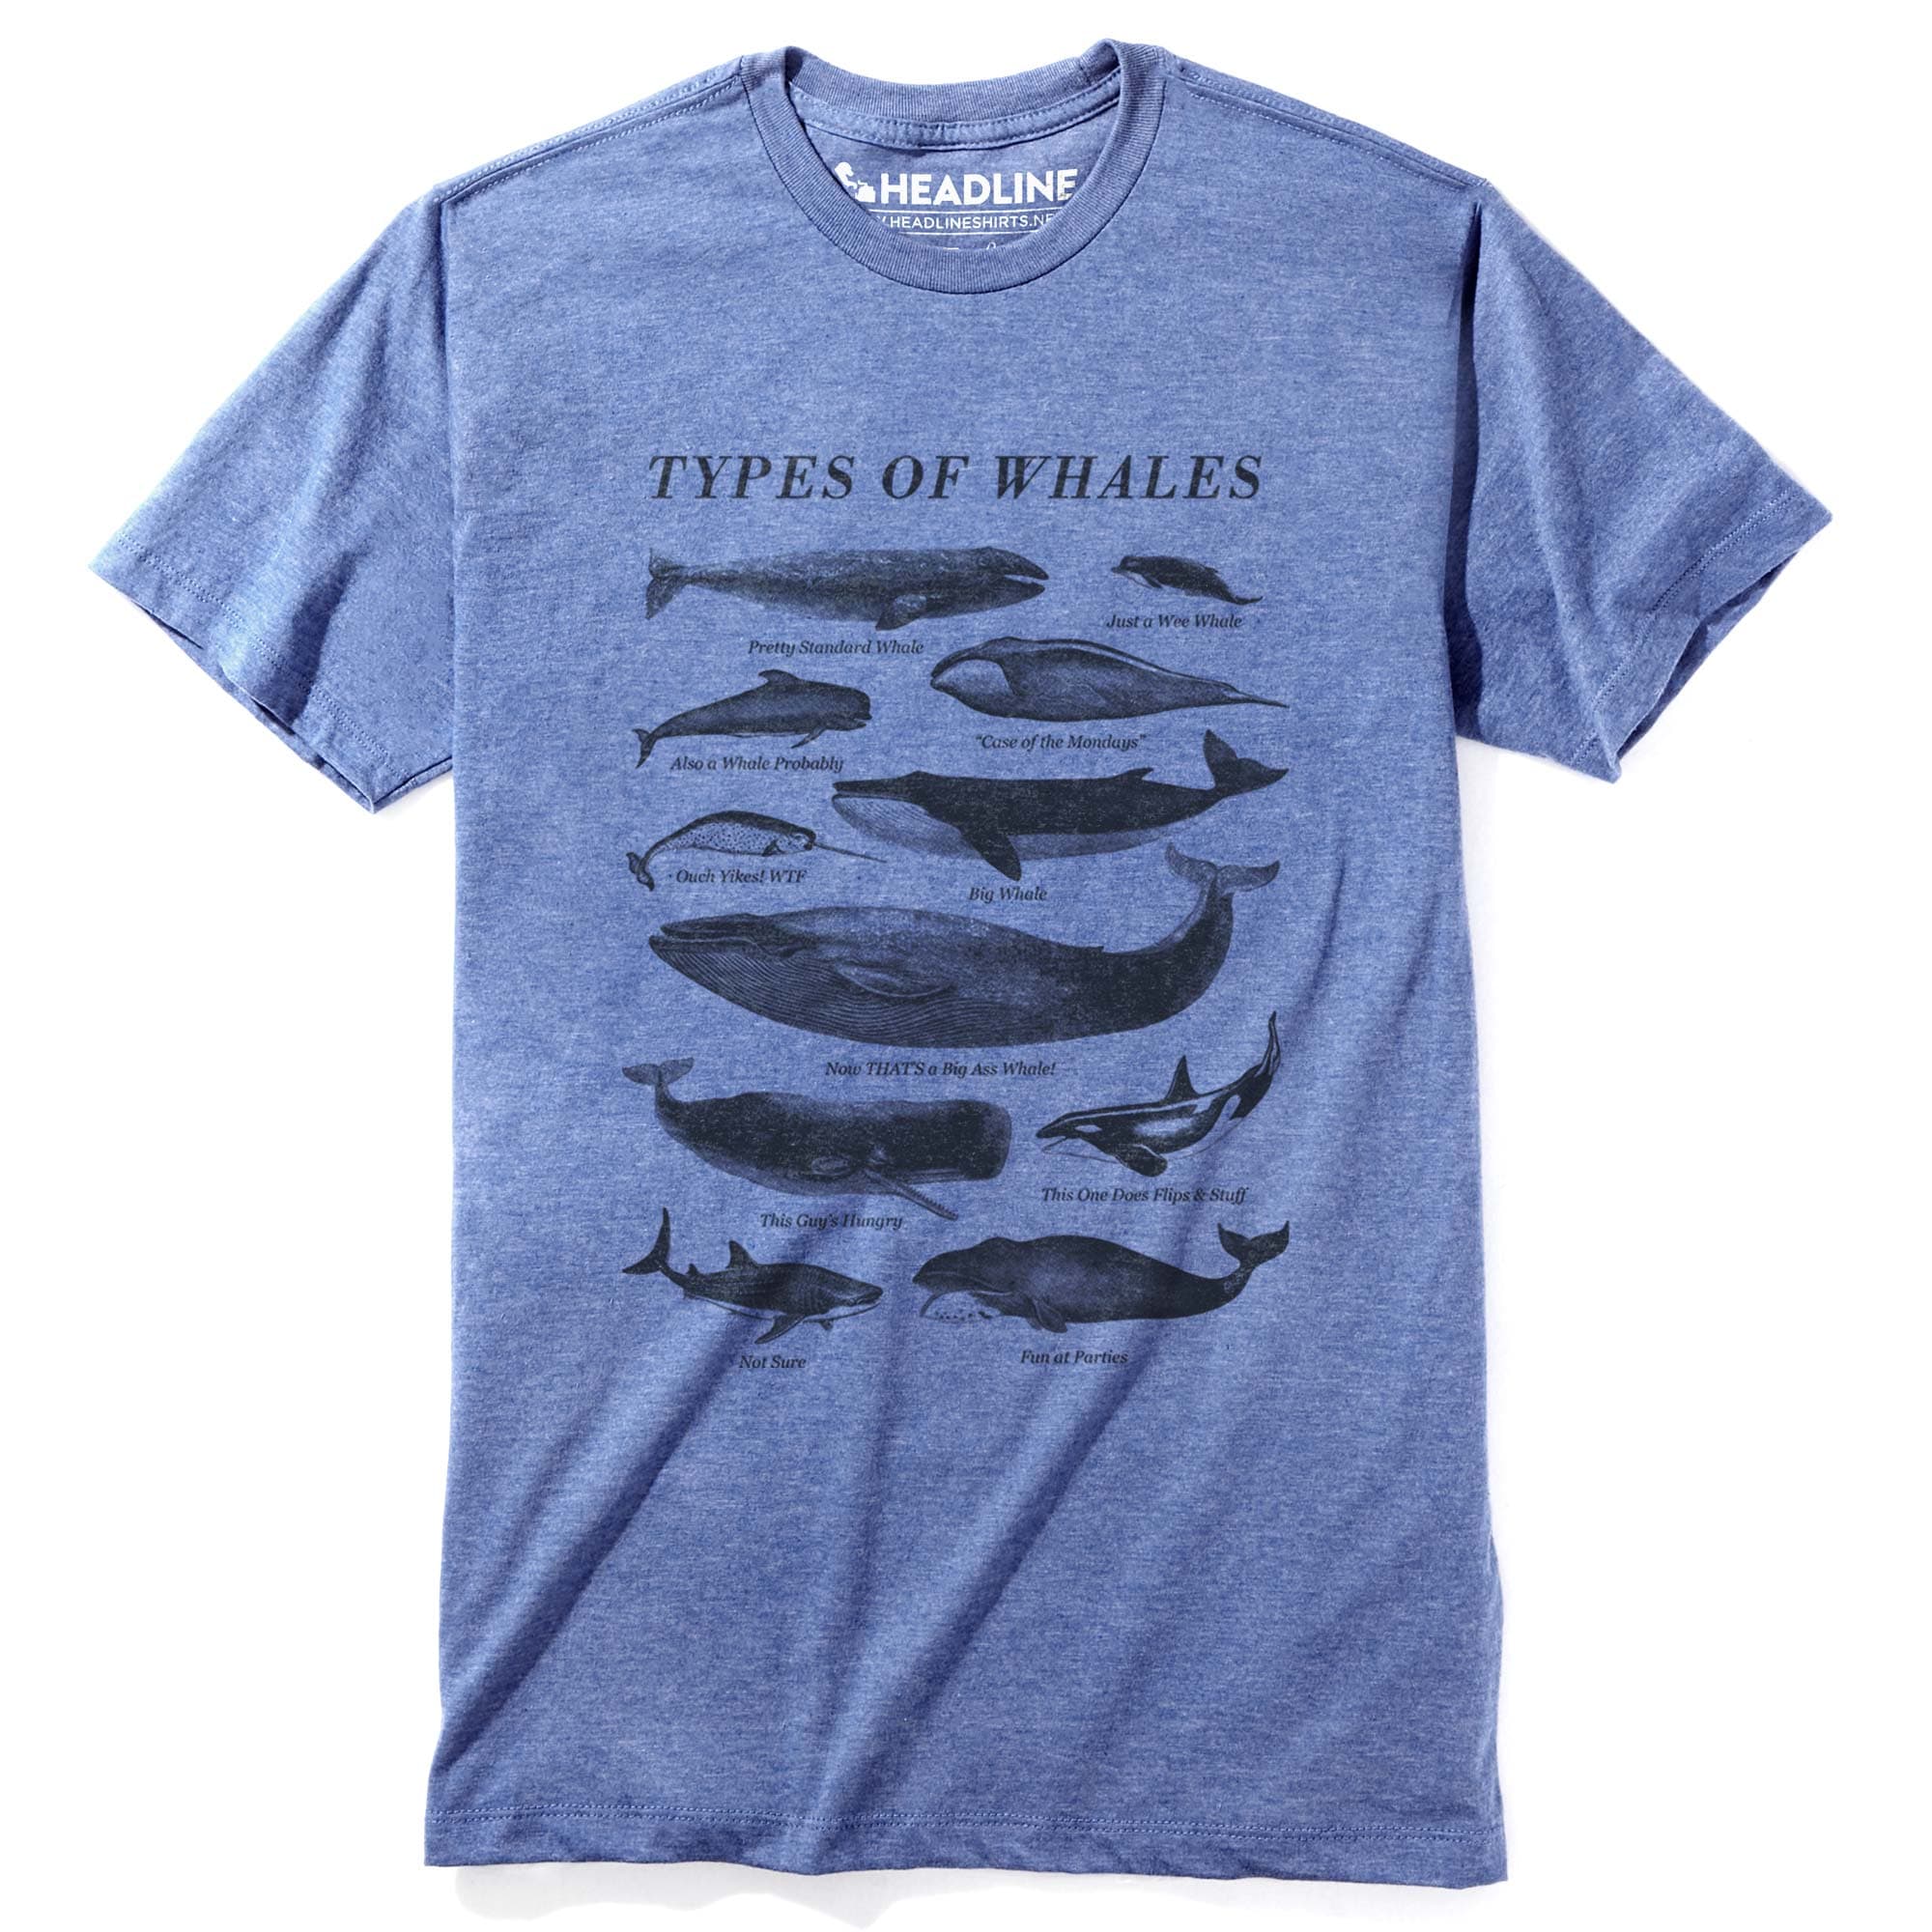 17 Funny Fishing T Shirts for Men ideas  fishing t shirts, fishing humor,  shirts